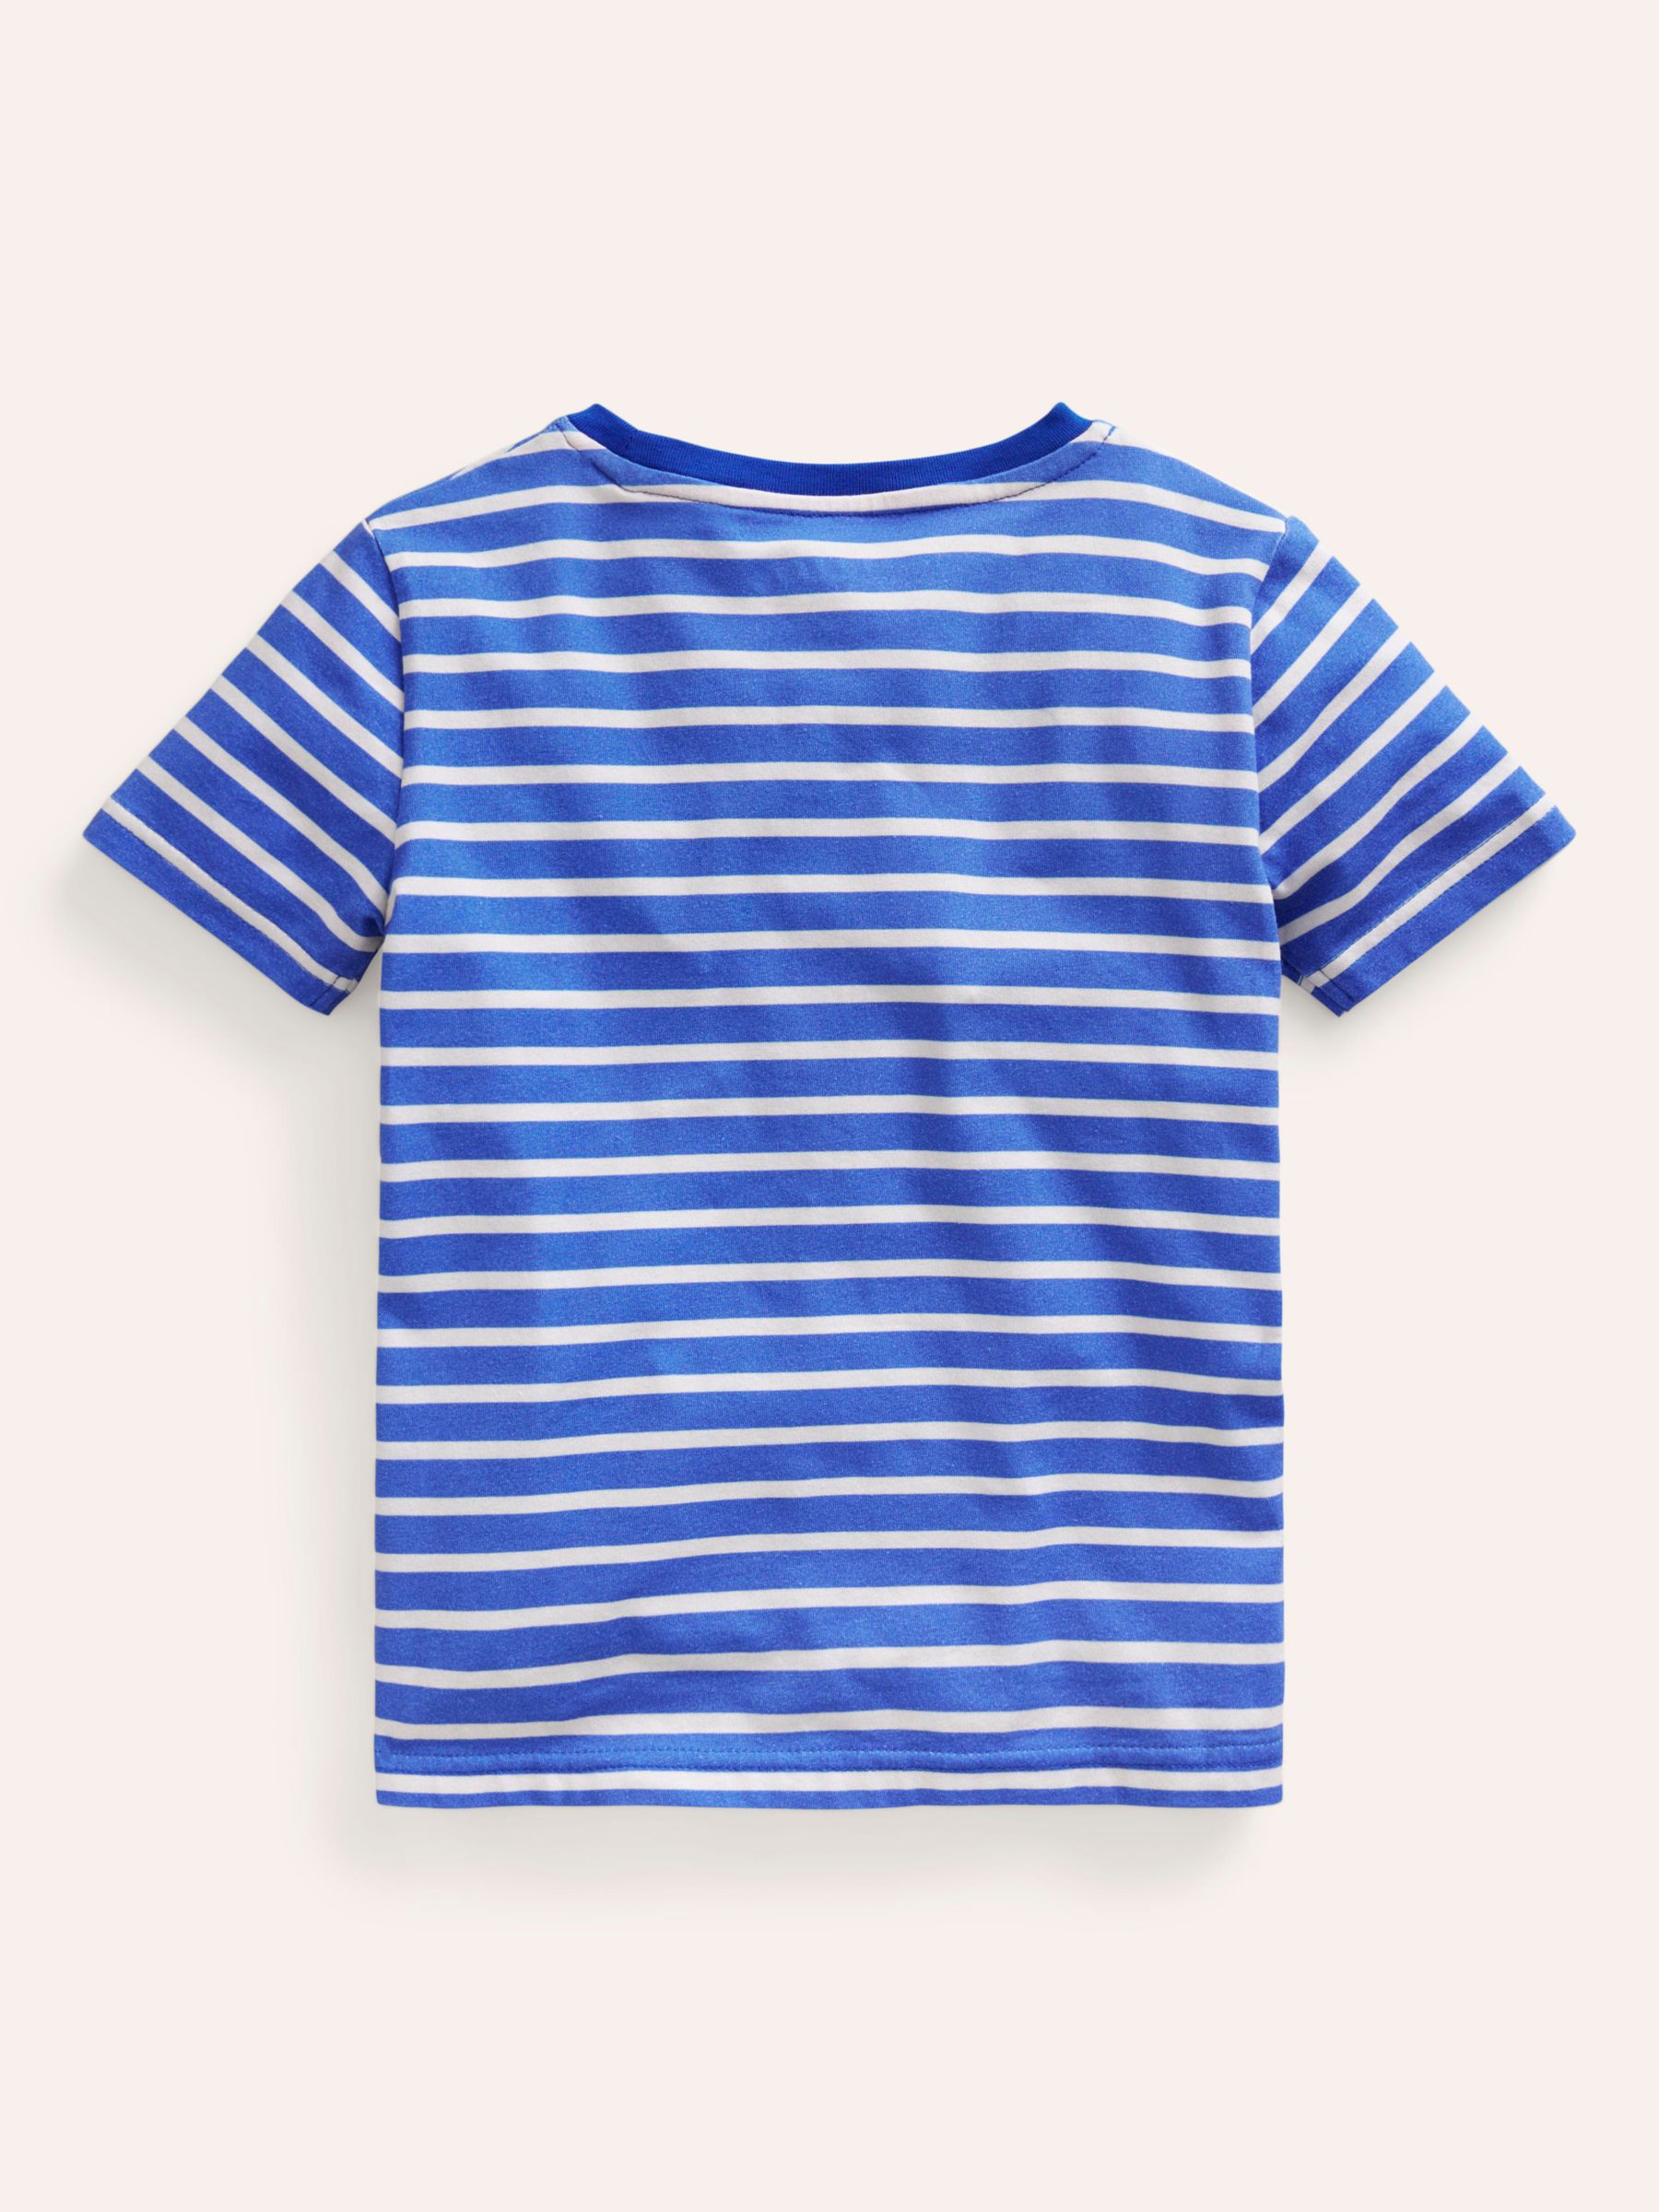 Mini Boden Kids' Chicken Applique Striped T-Shirt, Blue/Ivory, 8-9 years